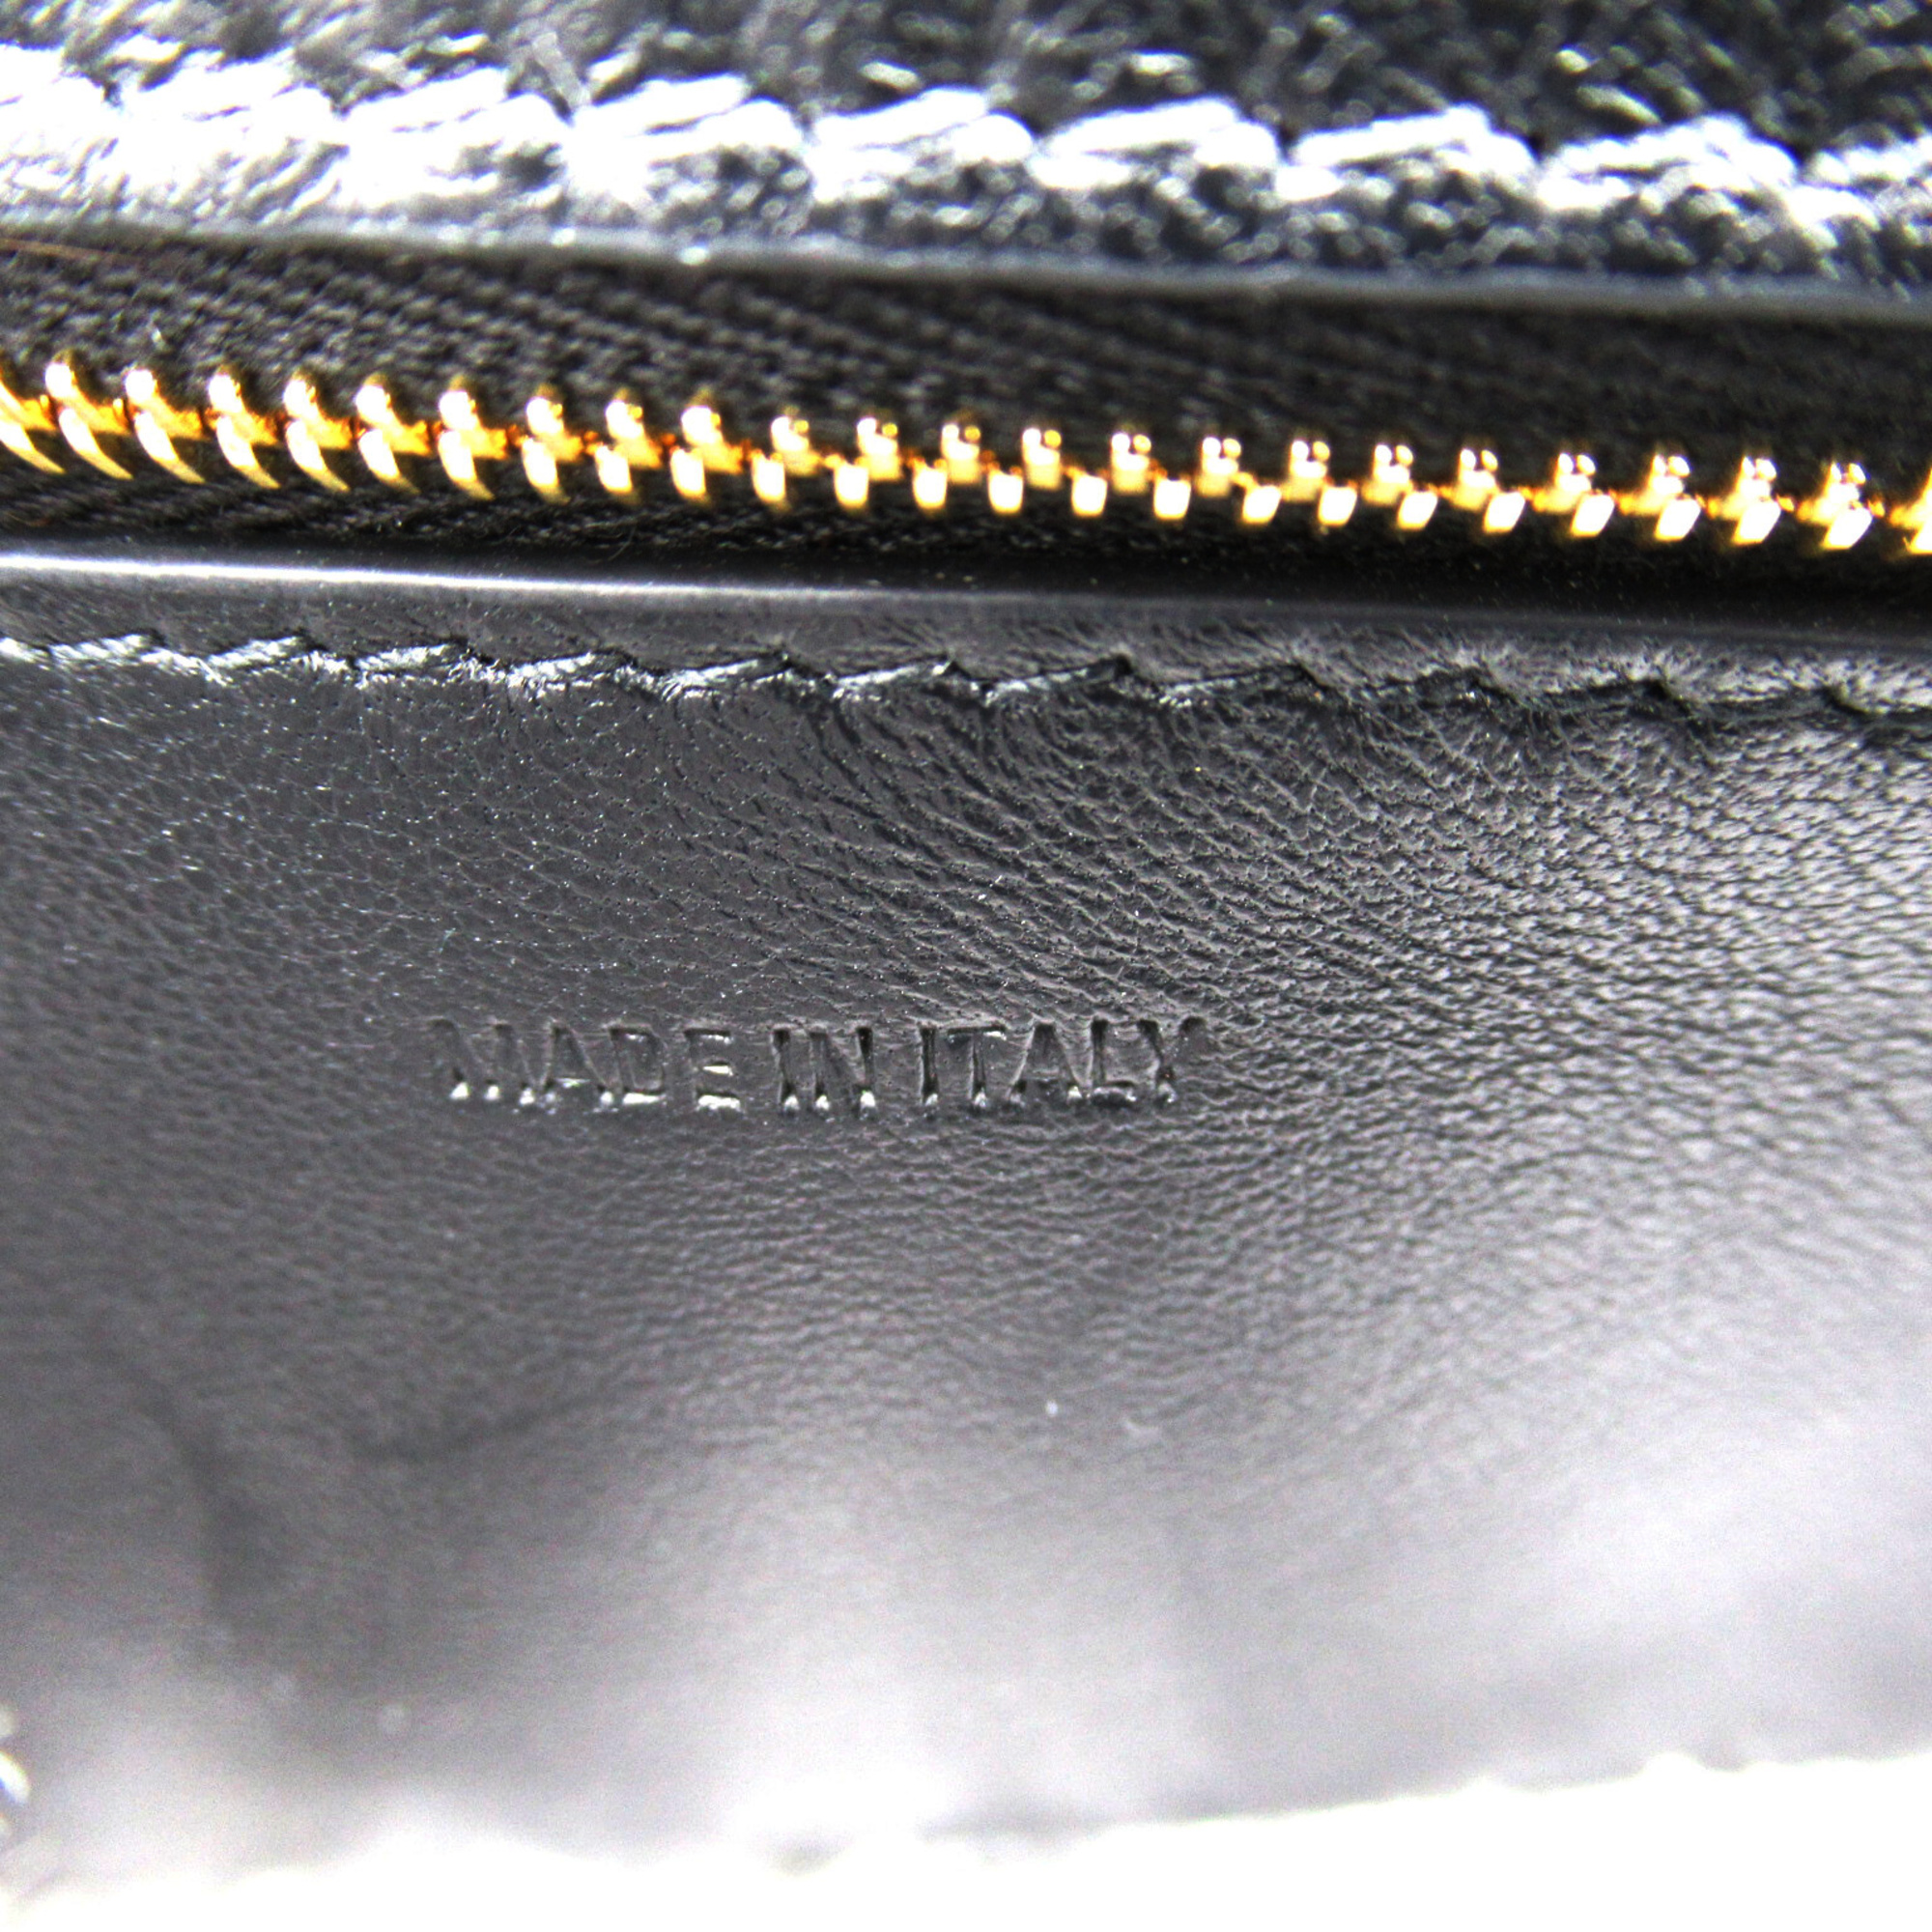 BALENCIAGA Shoulder Bag Black leather